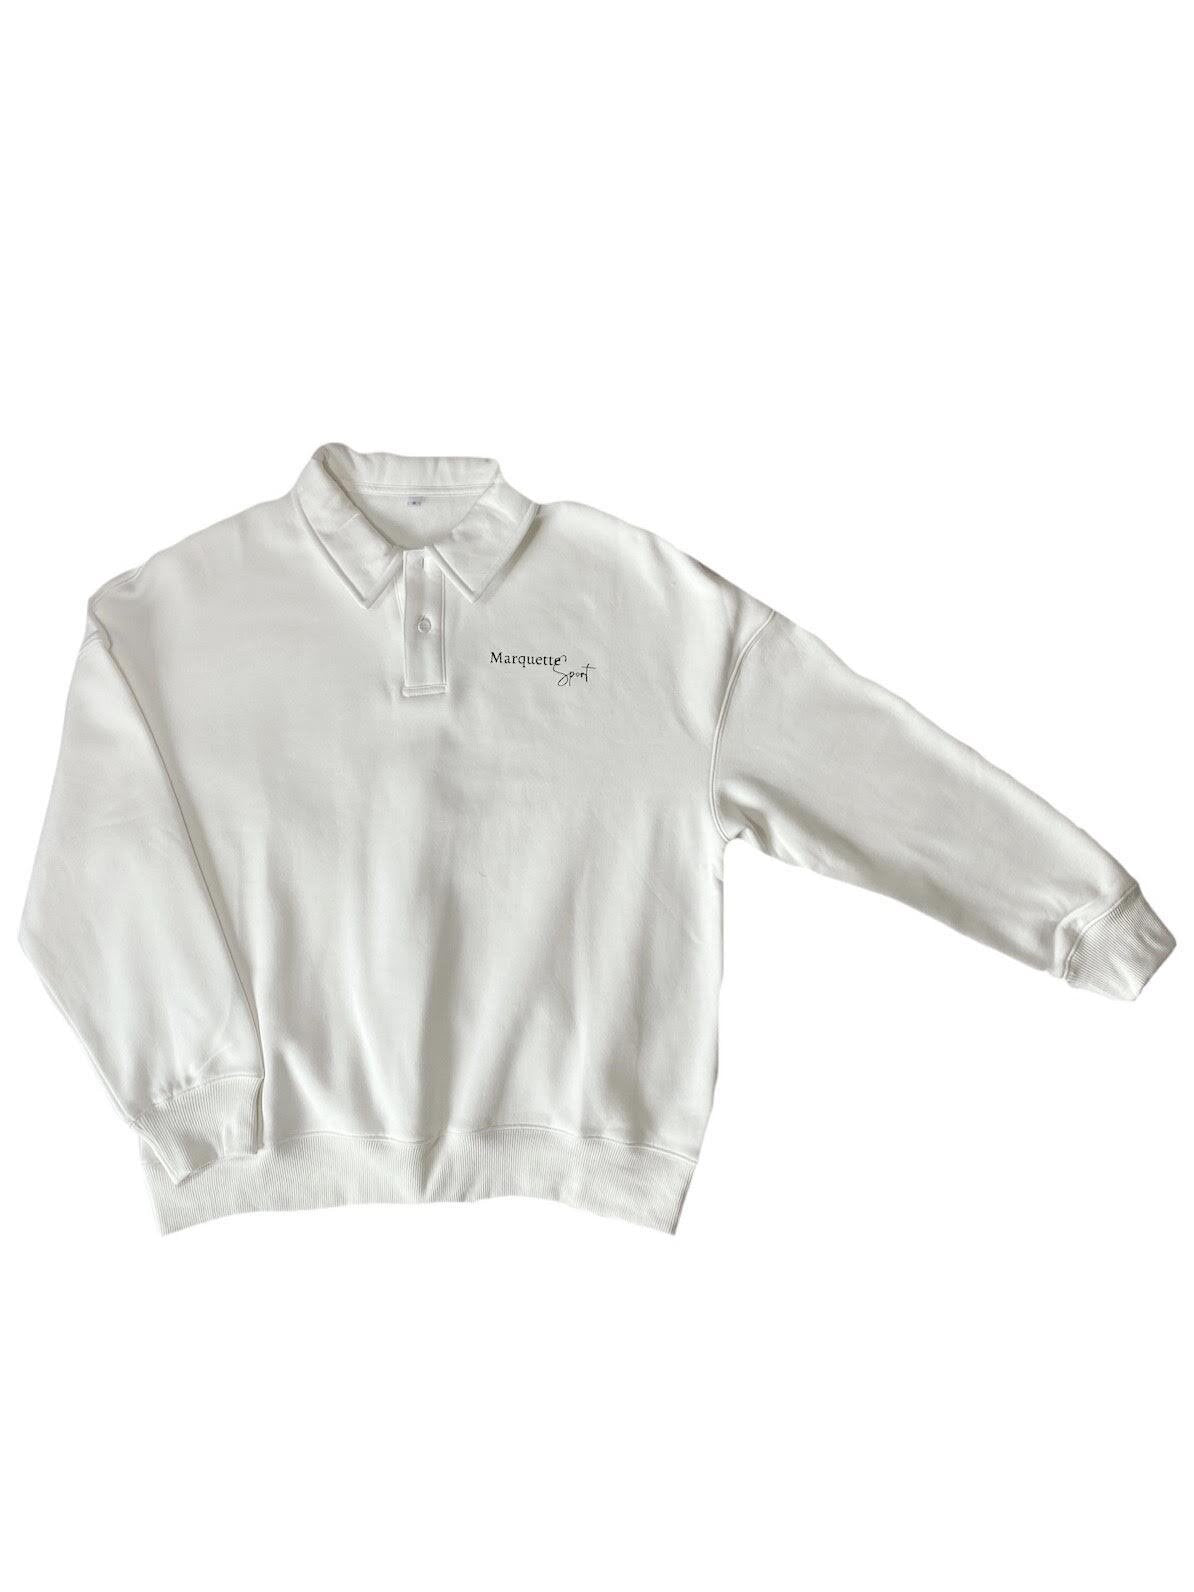 Off-White Collared Sweatshirt